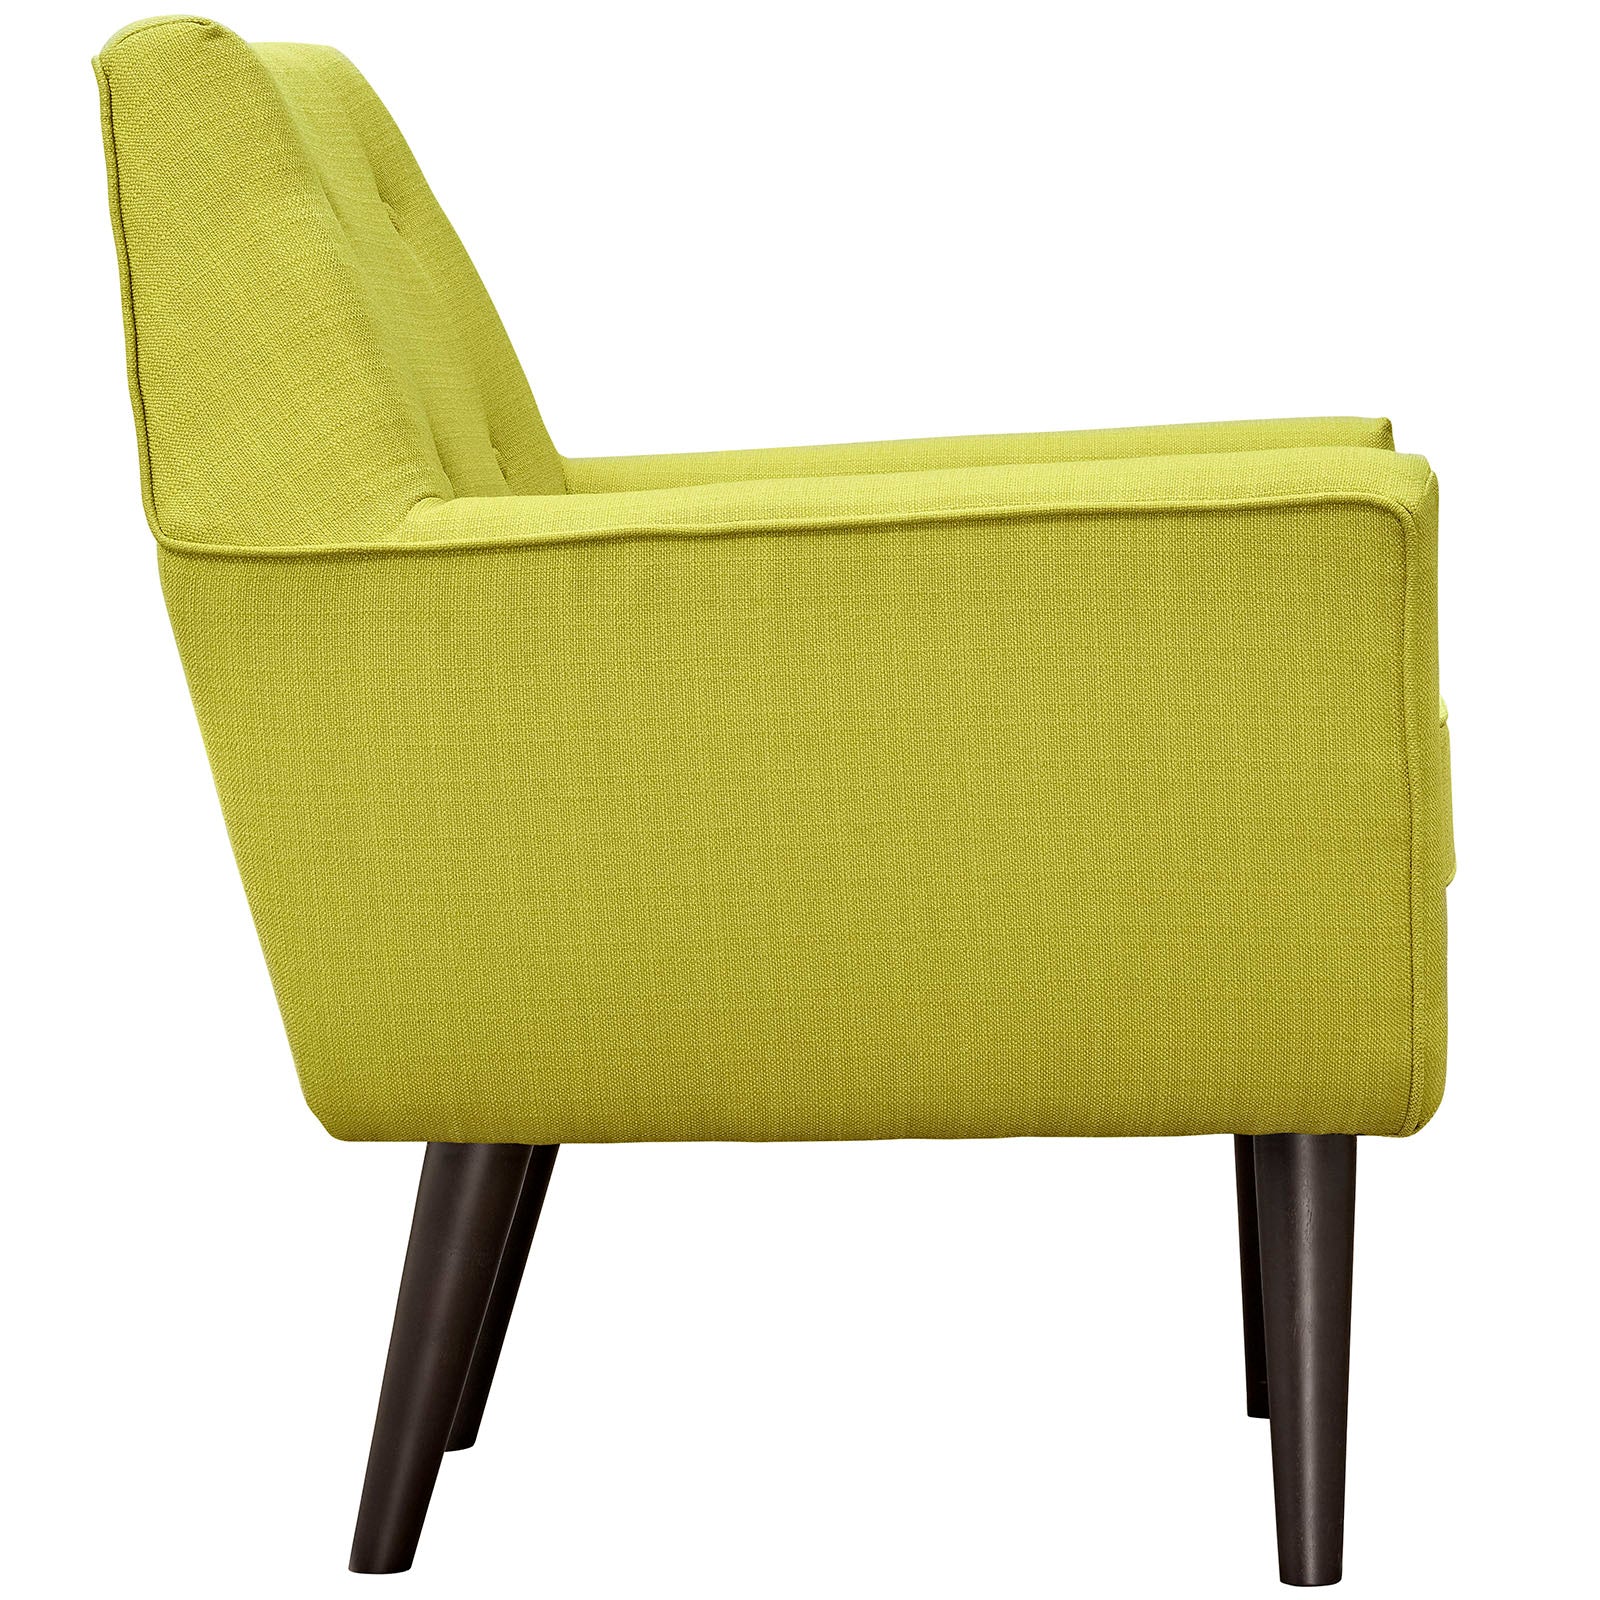 Posit Upholstered Fabric Armchair - East Shore Modern Home Furnishings